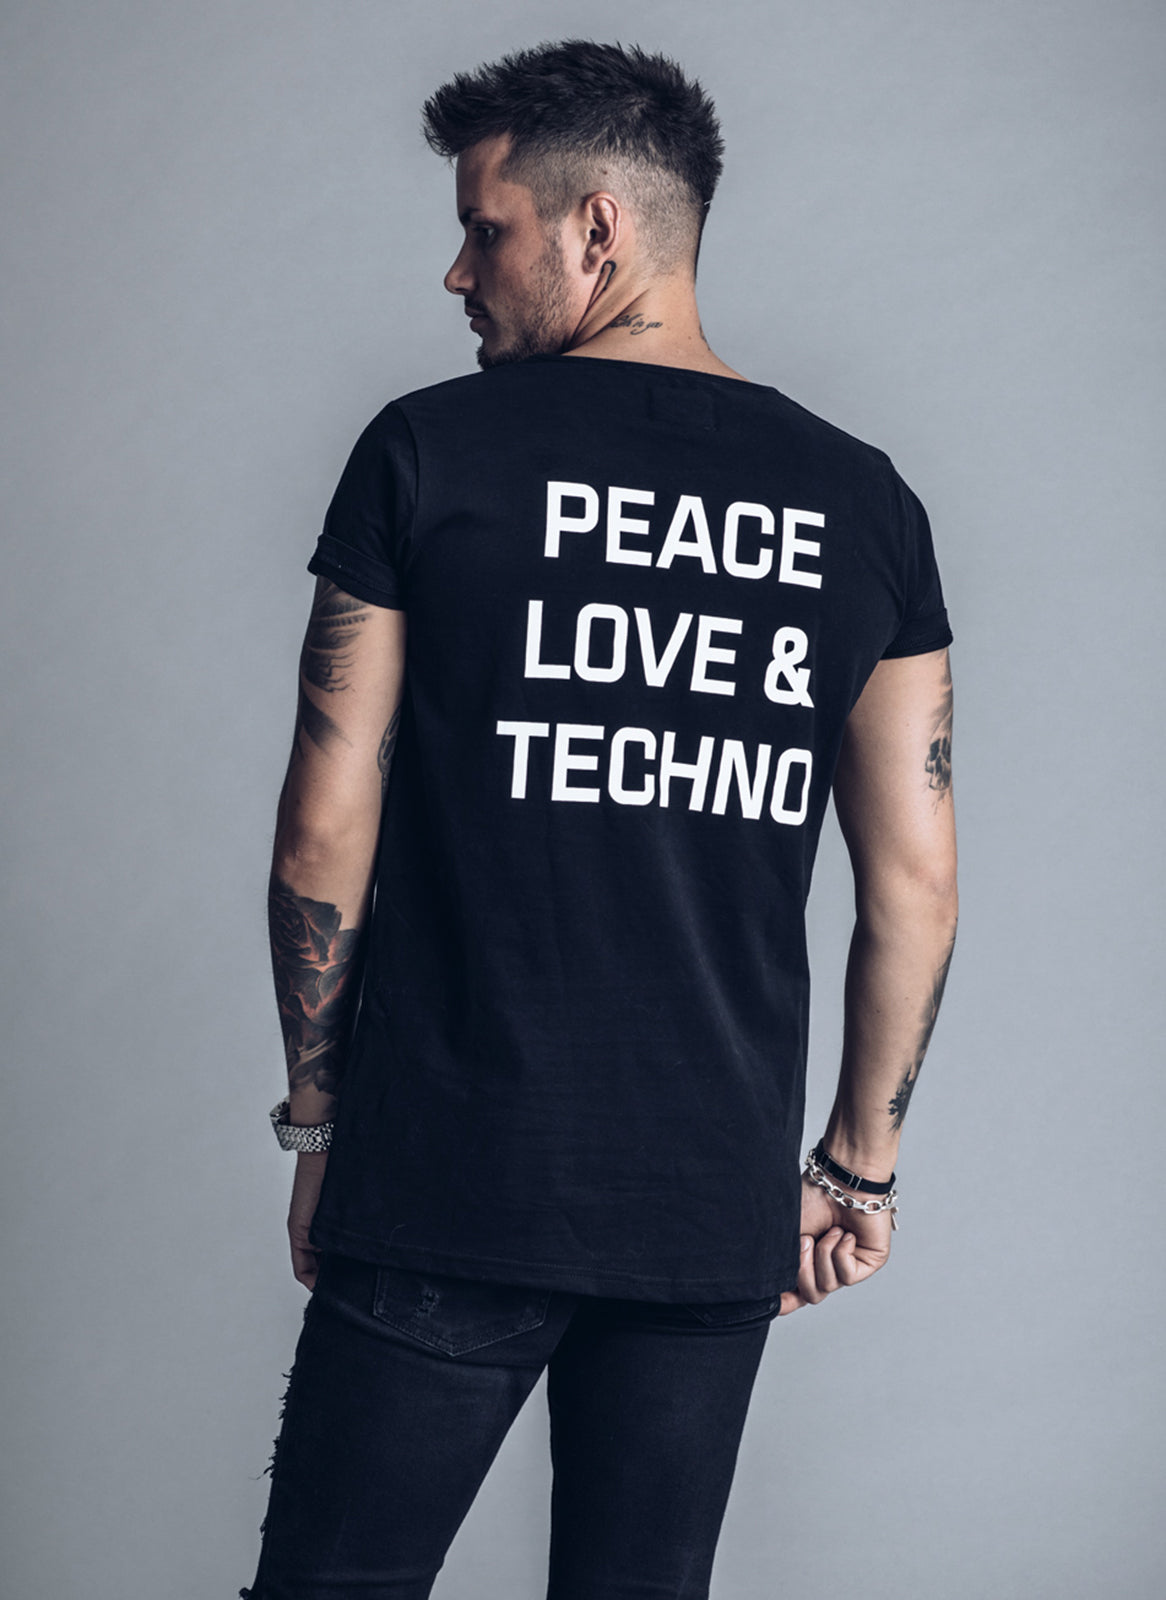 Peace Love Techno - Black t-shirt - We love techno